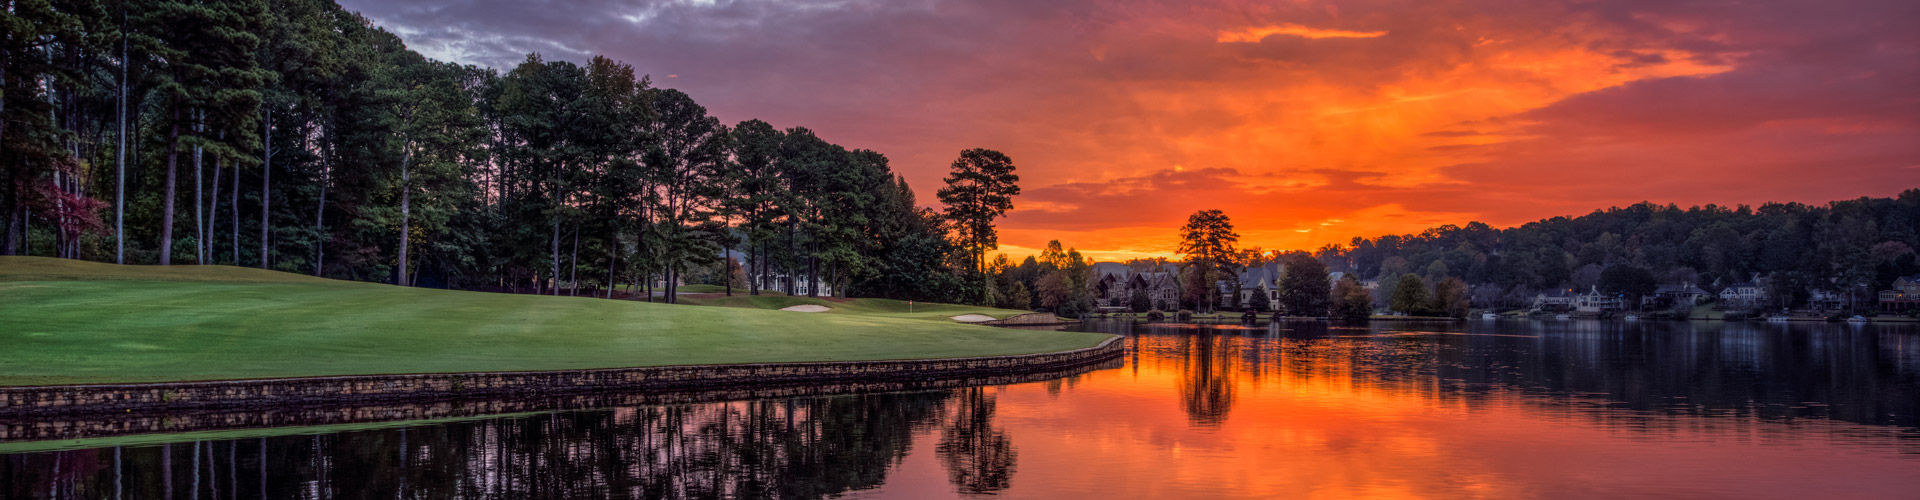 Beautiful Sunset at the Golf Club of Georgia